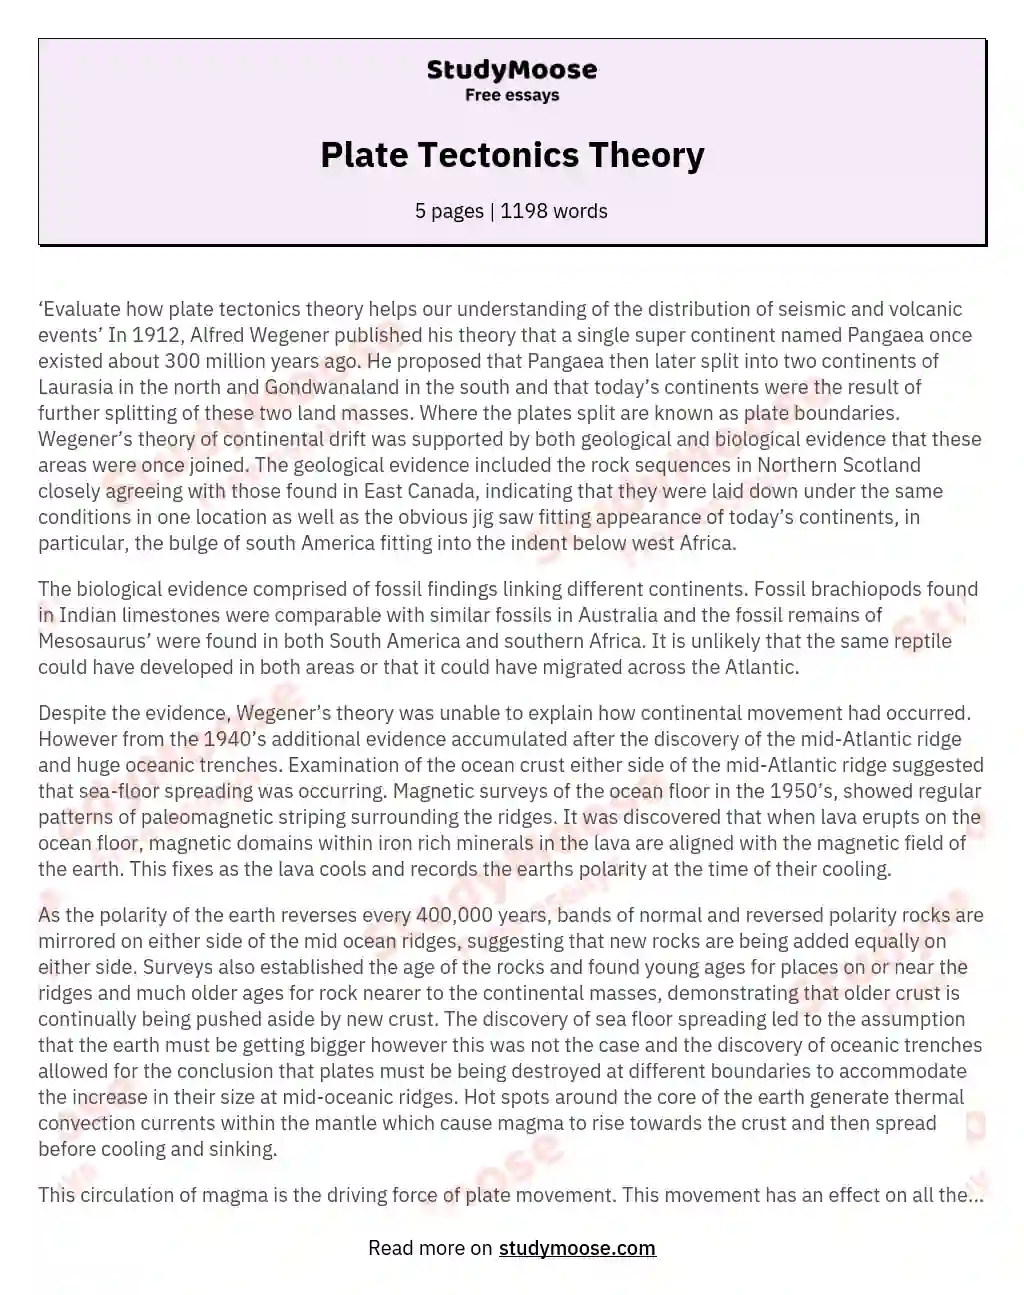 Plate Tectonics Theory essay